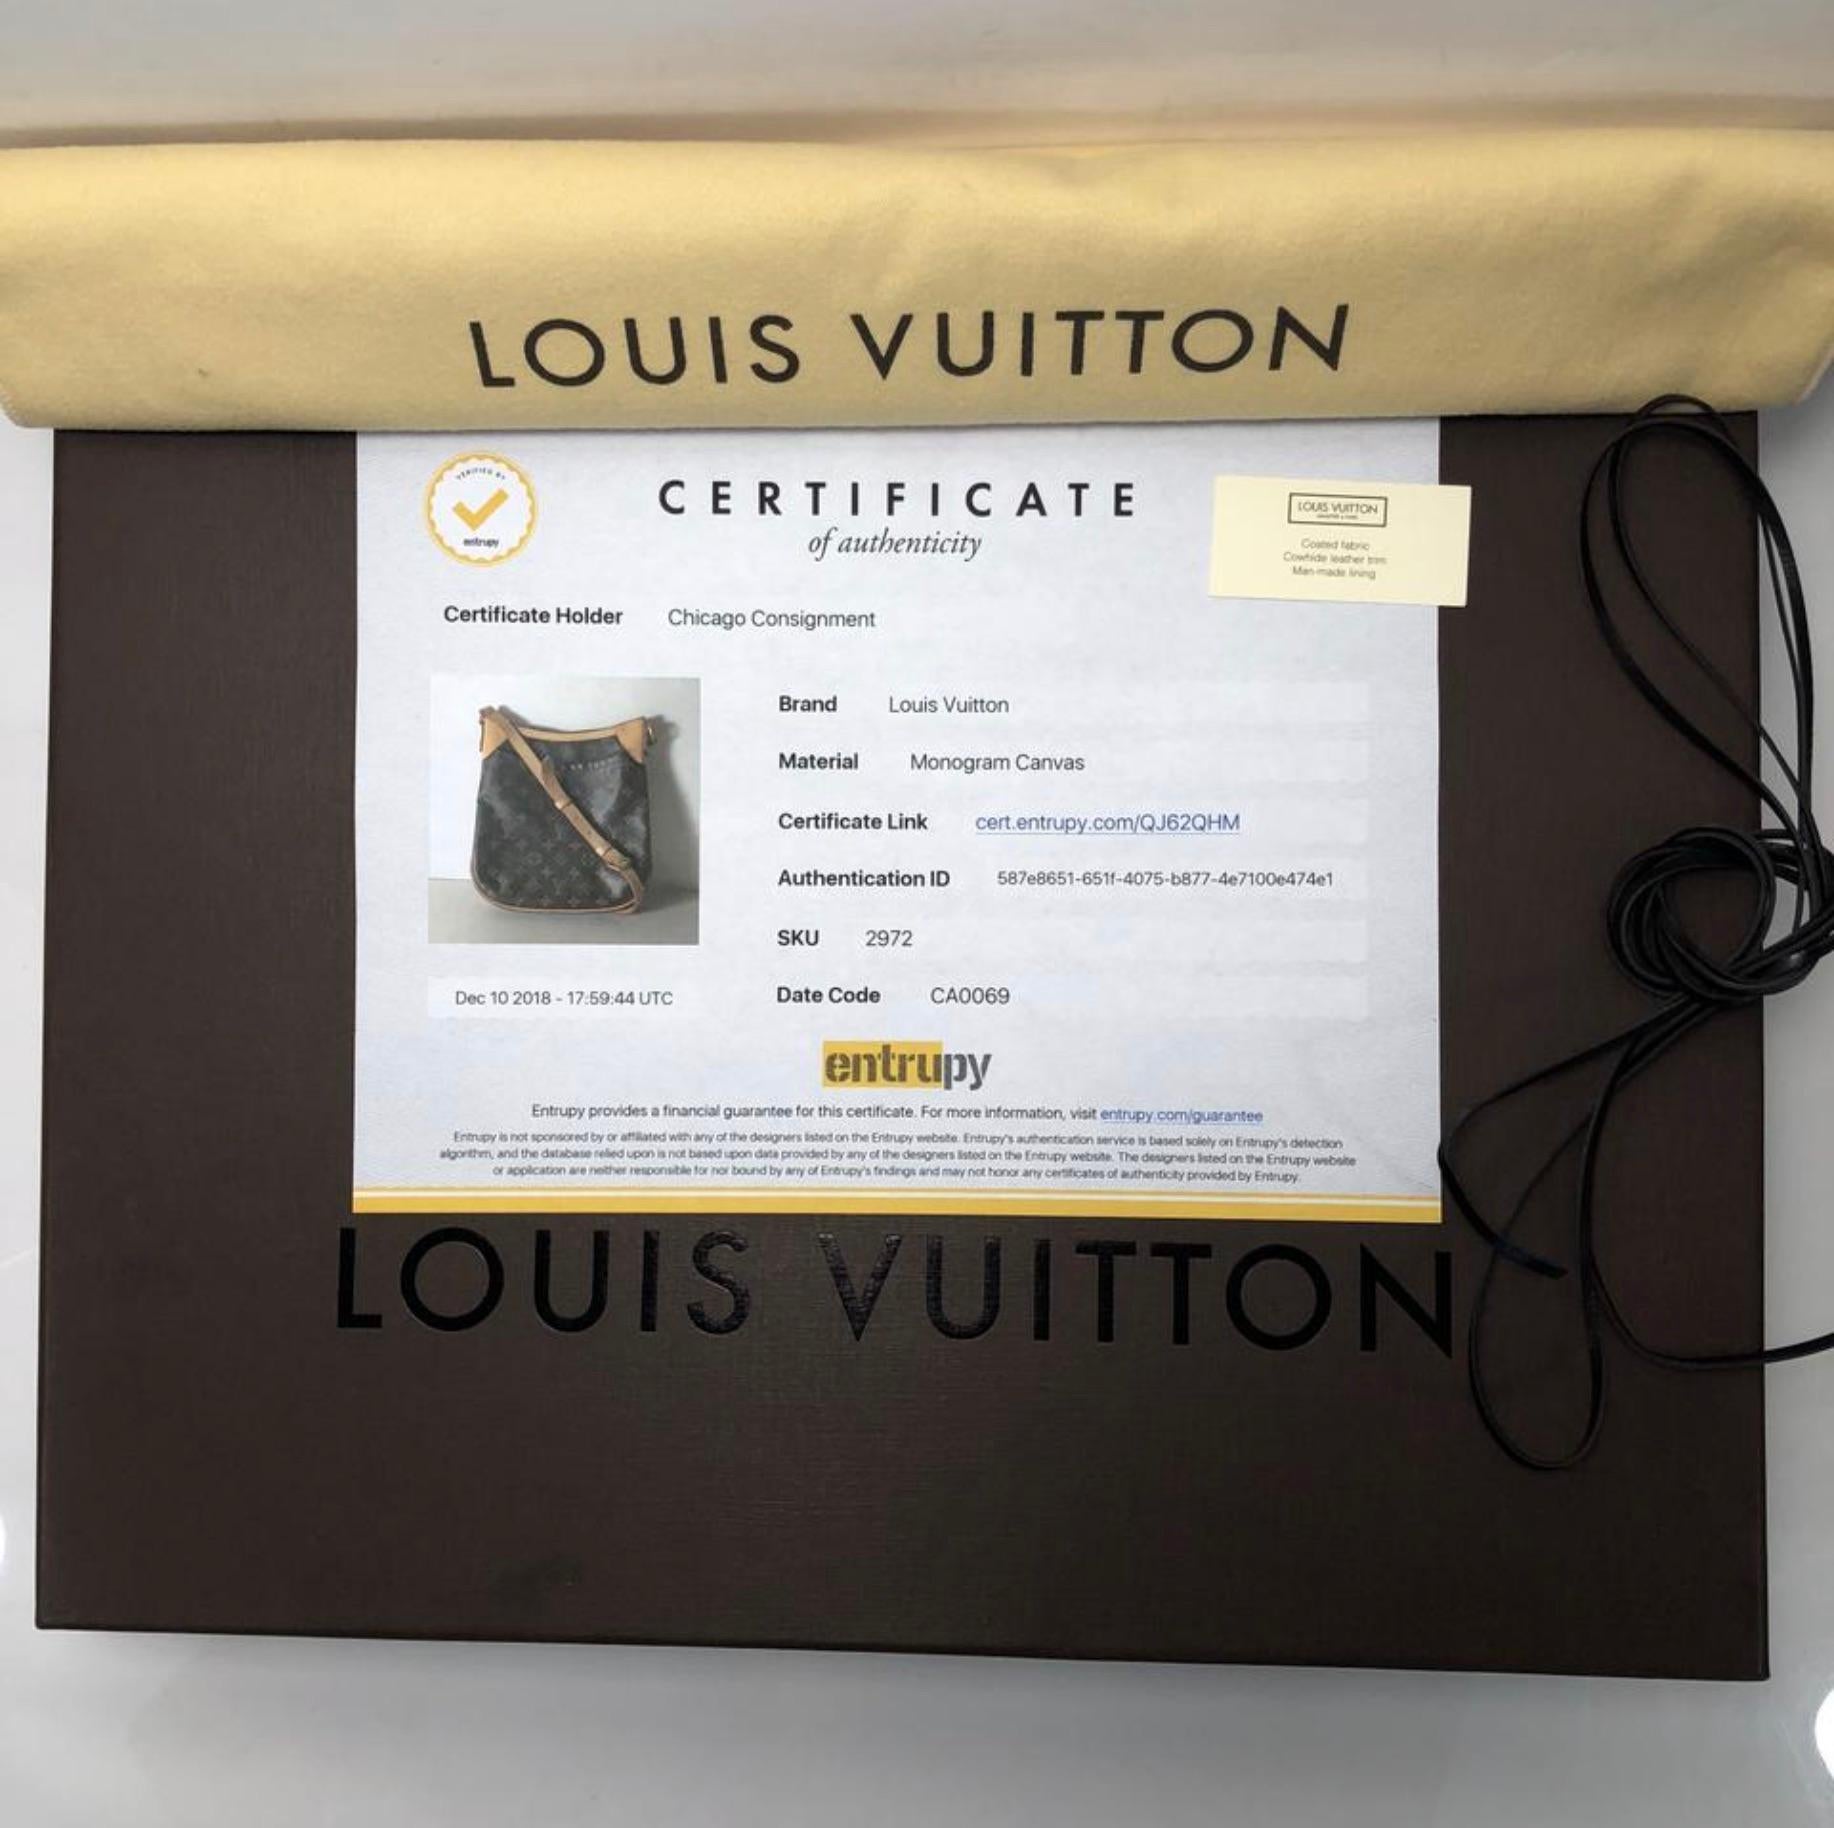 MODEL - Louis Vuitton Monogram Odeon PM Crossbody Shoulder Handbag

CONDITION - Exceptional! No signs of wear.

SKU - 2972

ORIGINAL/CURRENT RETAIL PRICE - 1120 + tax - This model sells above original retail.

DATE/SERIAL CODE - CA0069

ORIGIN -